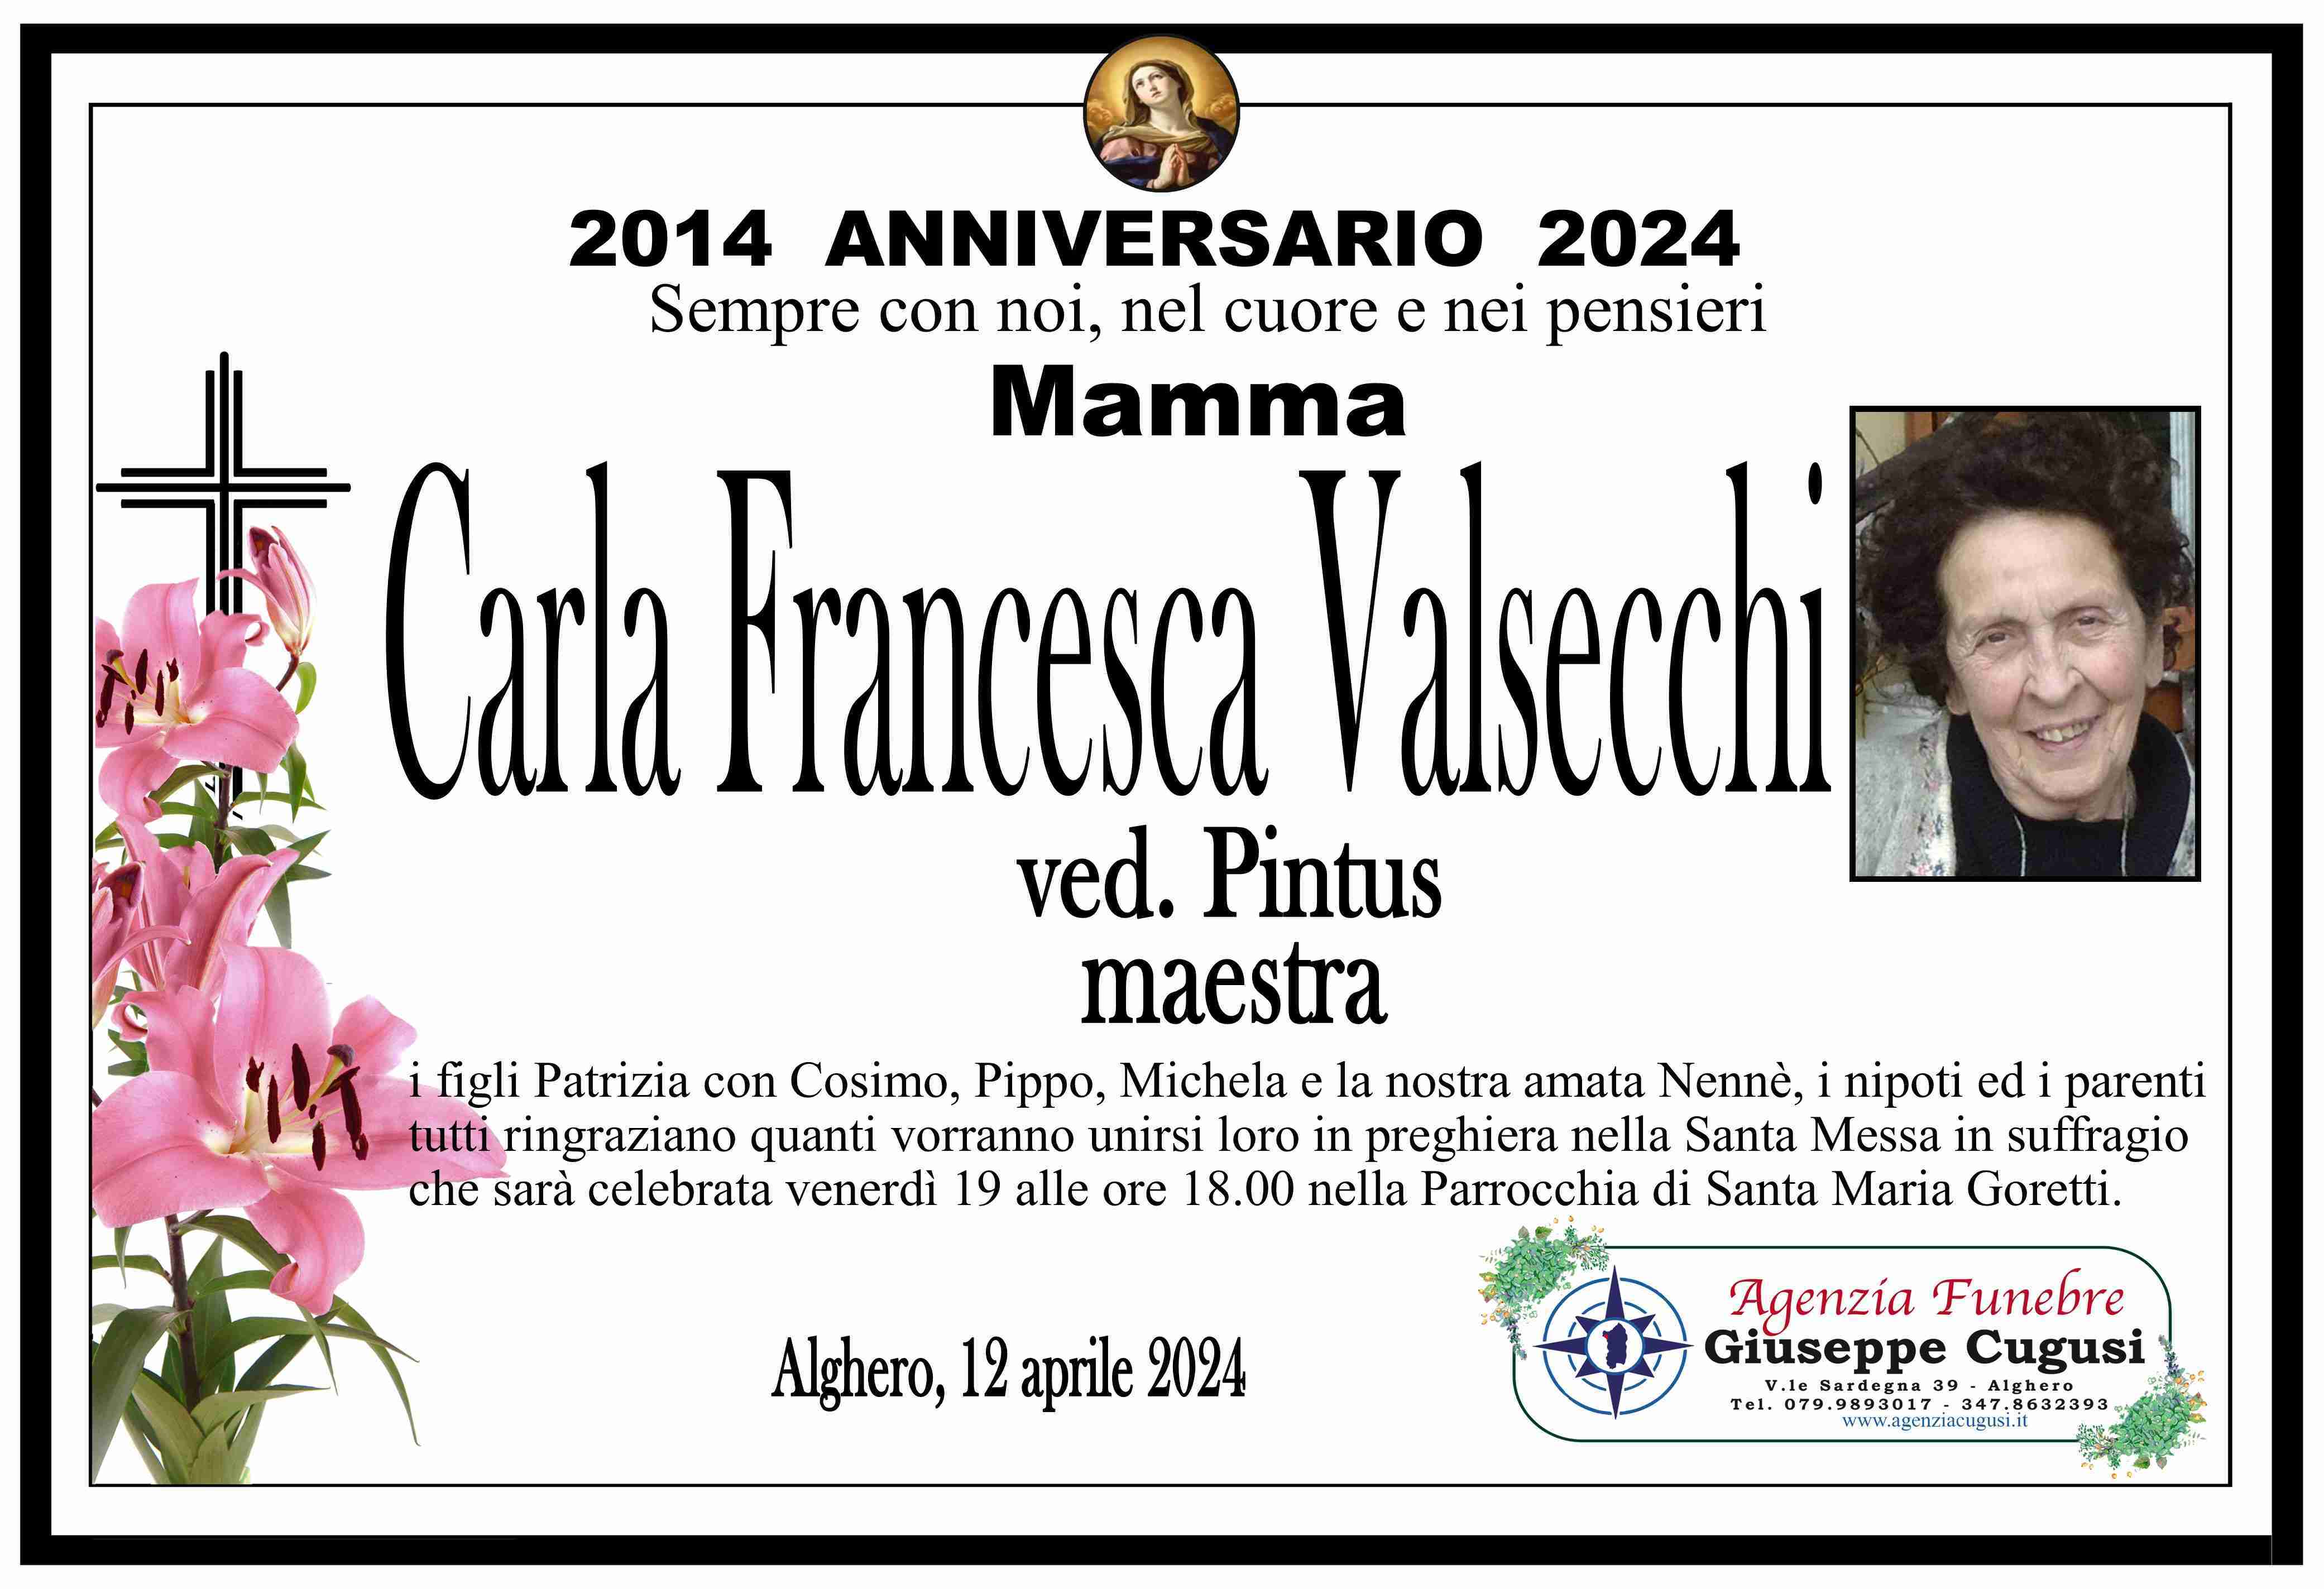 Carla Francesca Valsecchi